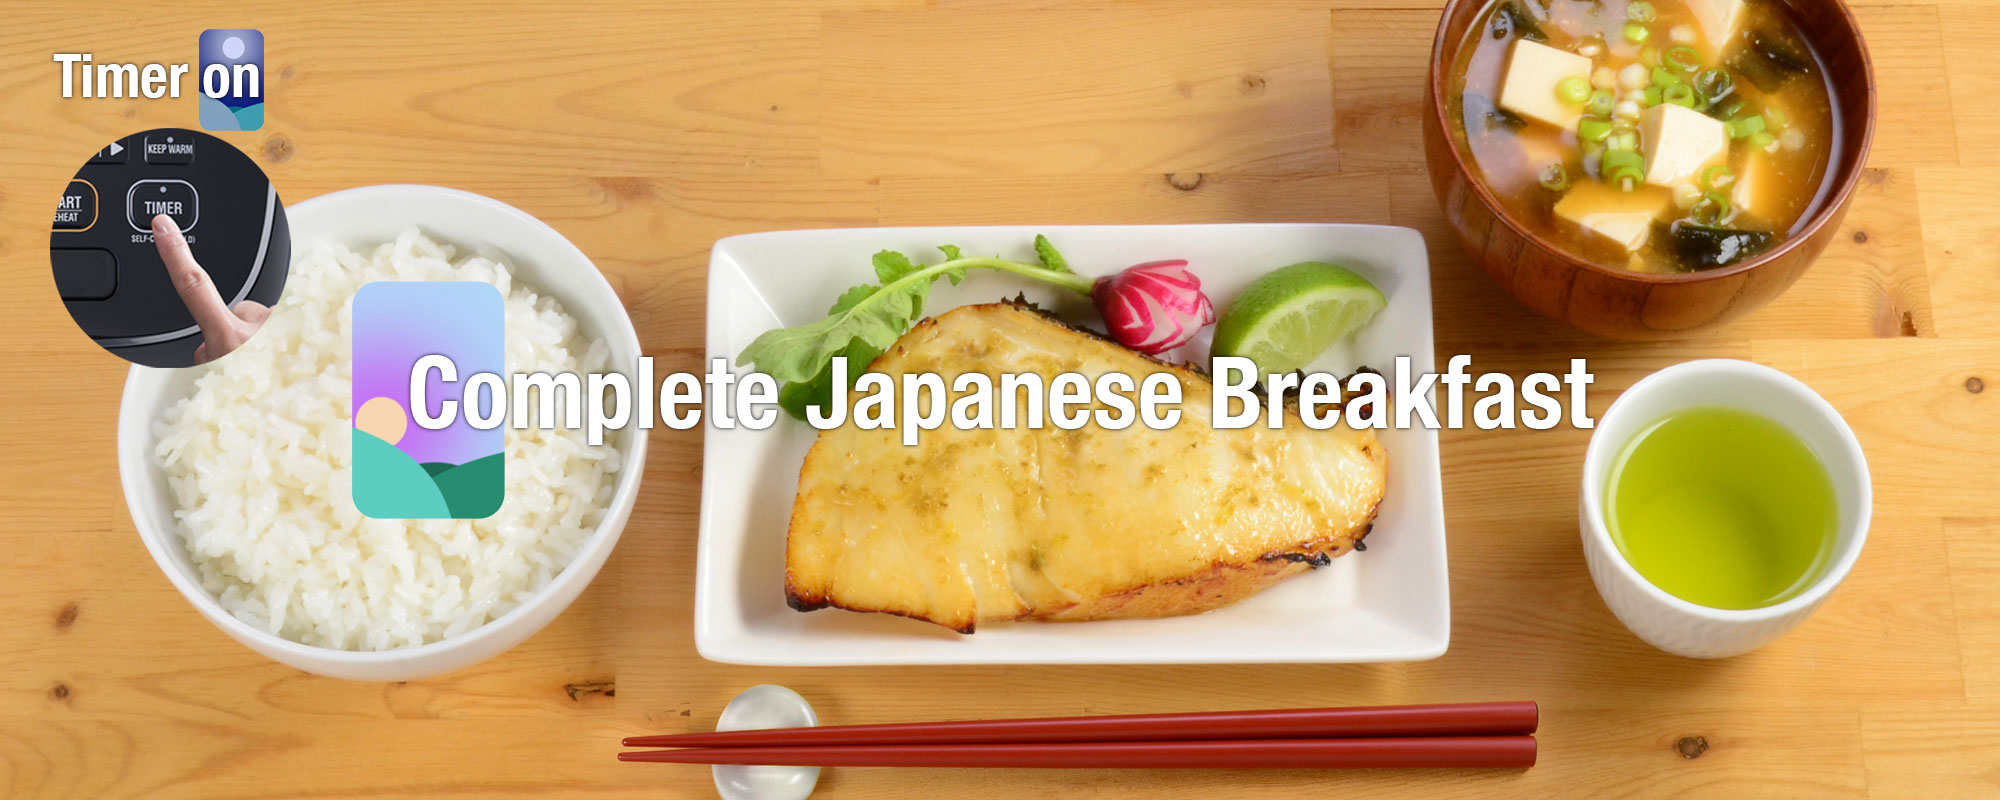 Complete Japanese Breakfast